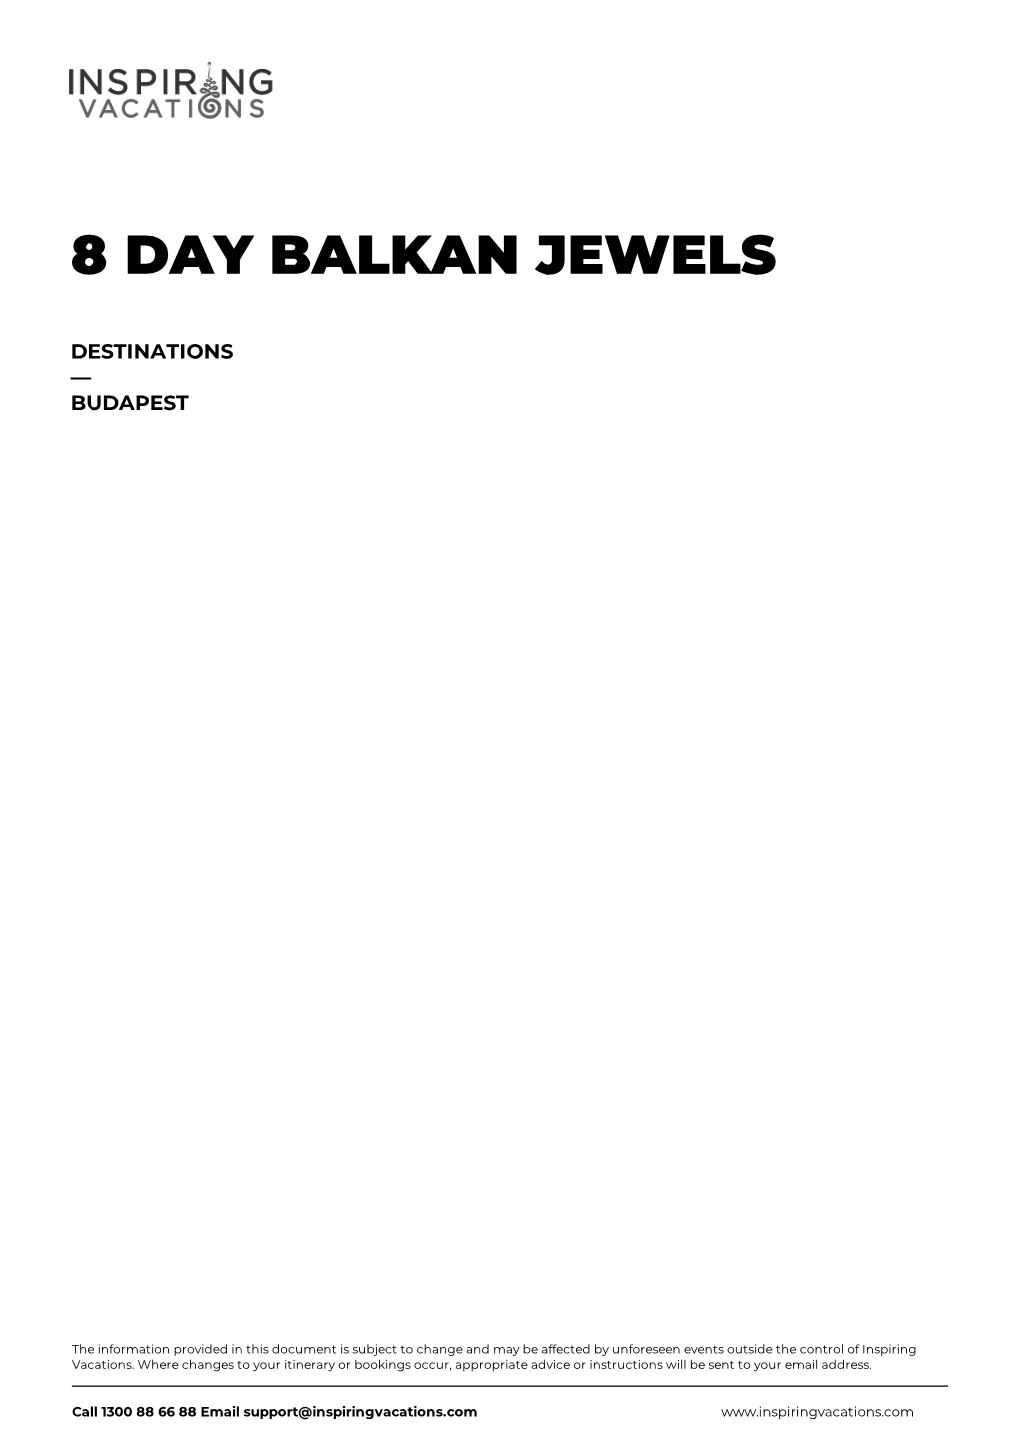 8 Day Balkan Jewels